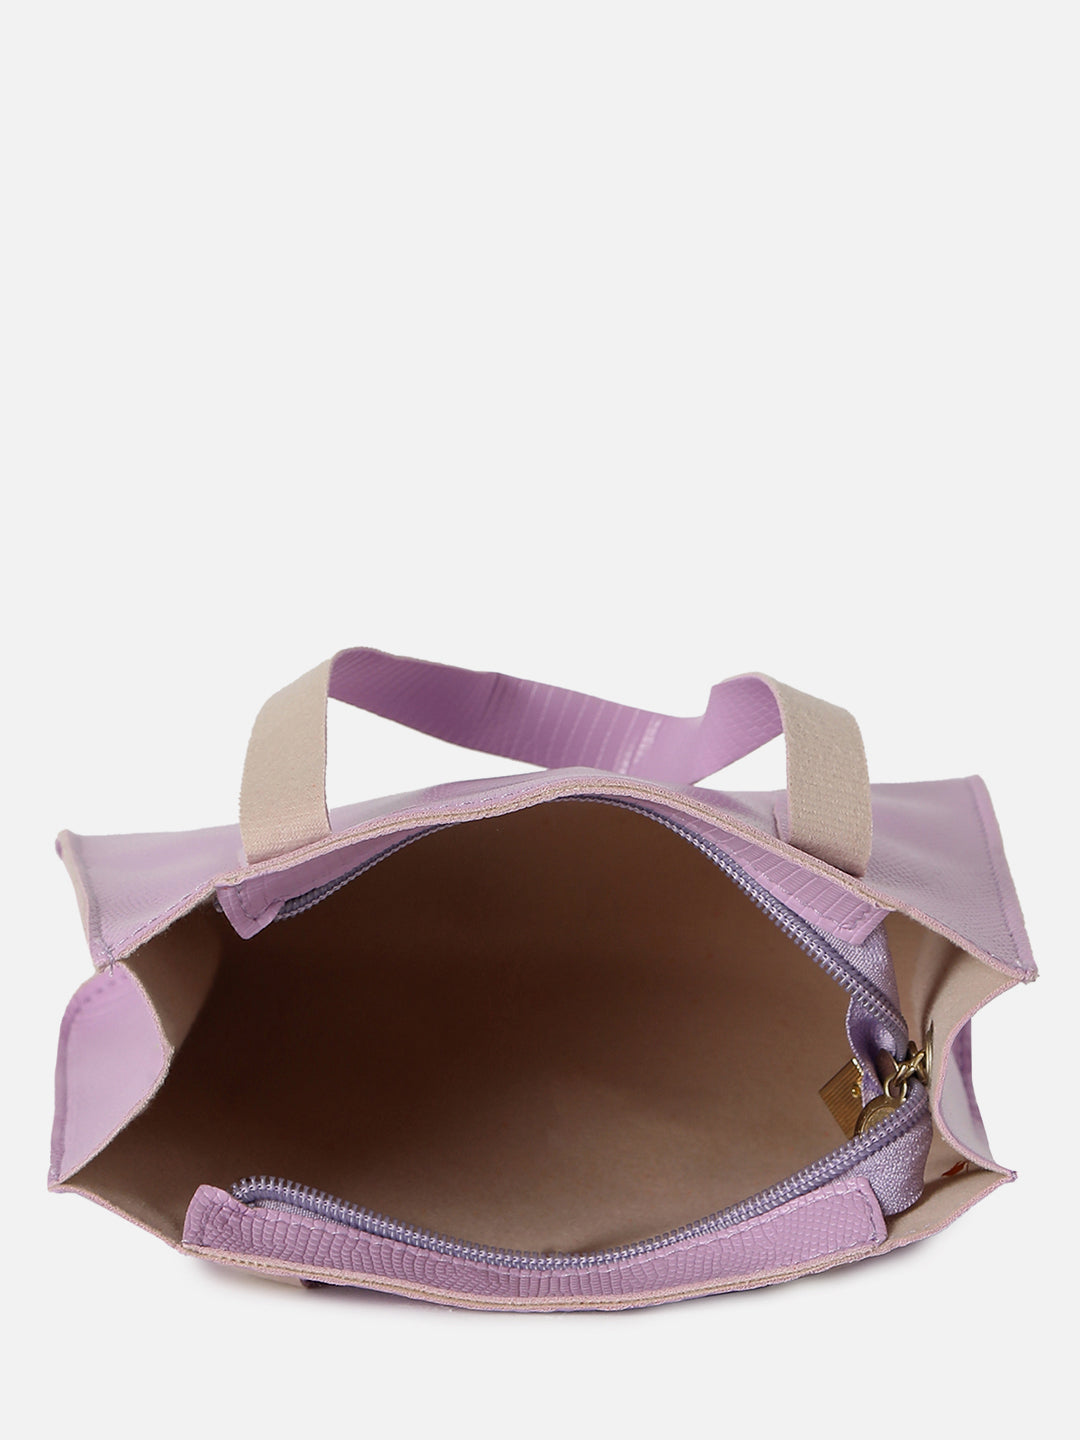 Lilac Purple Handbag